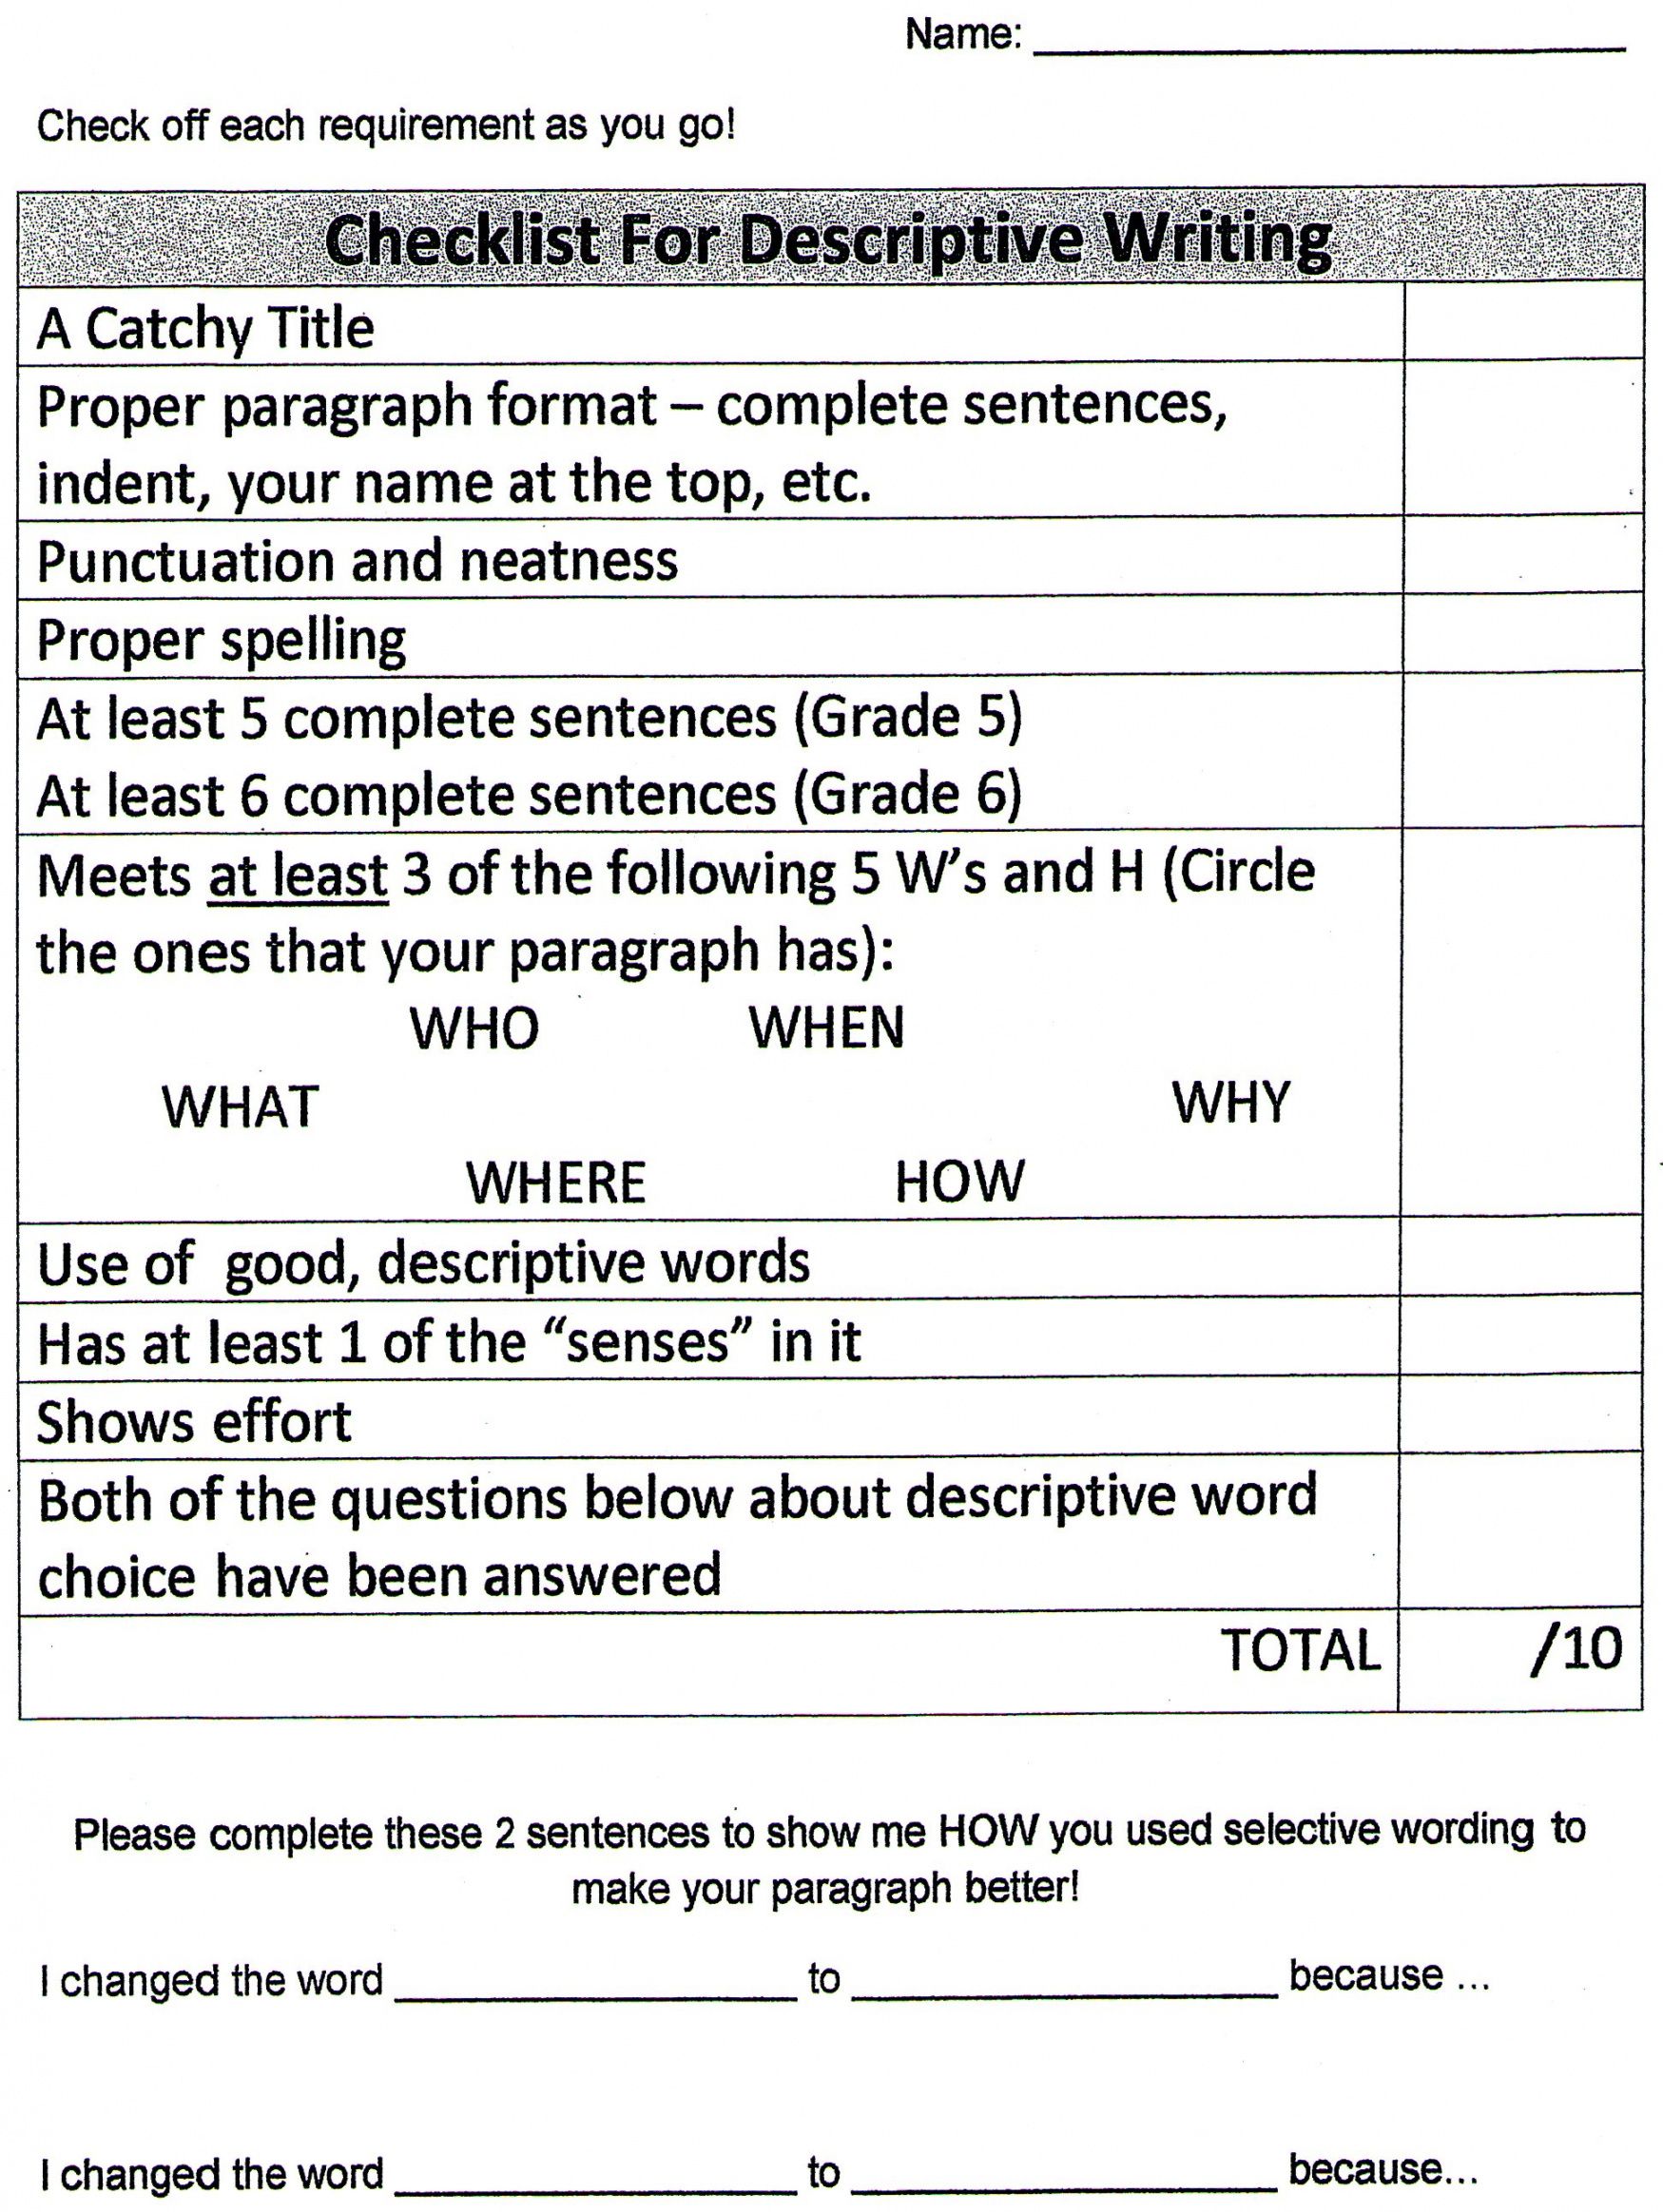 free evaluation  miss miller checklist rubric template pdf